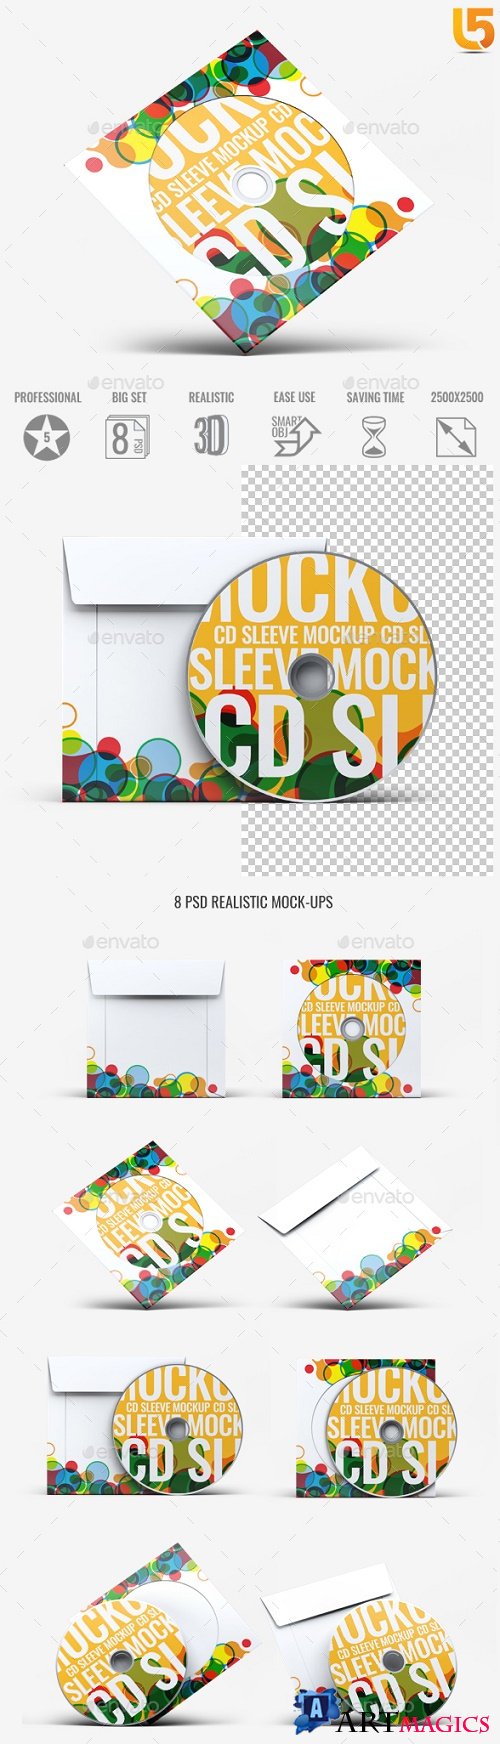 CD Sleeve Cover Mock-Up v01 21789451